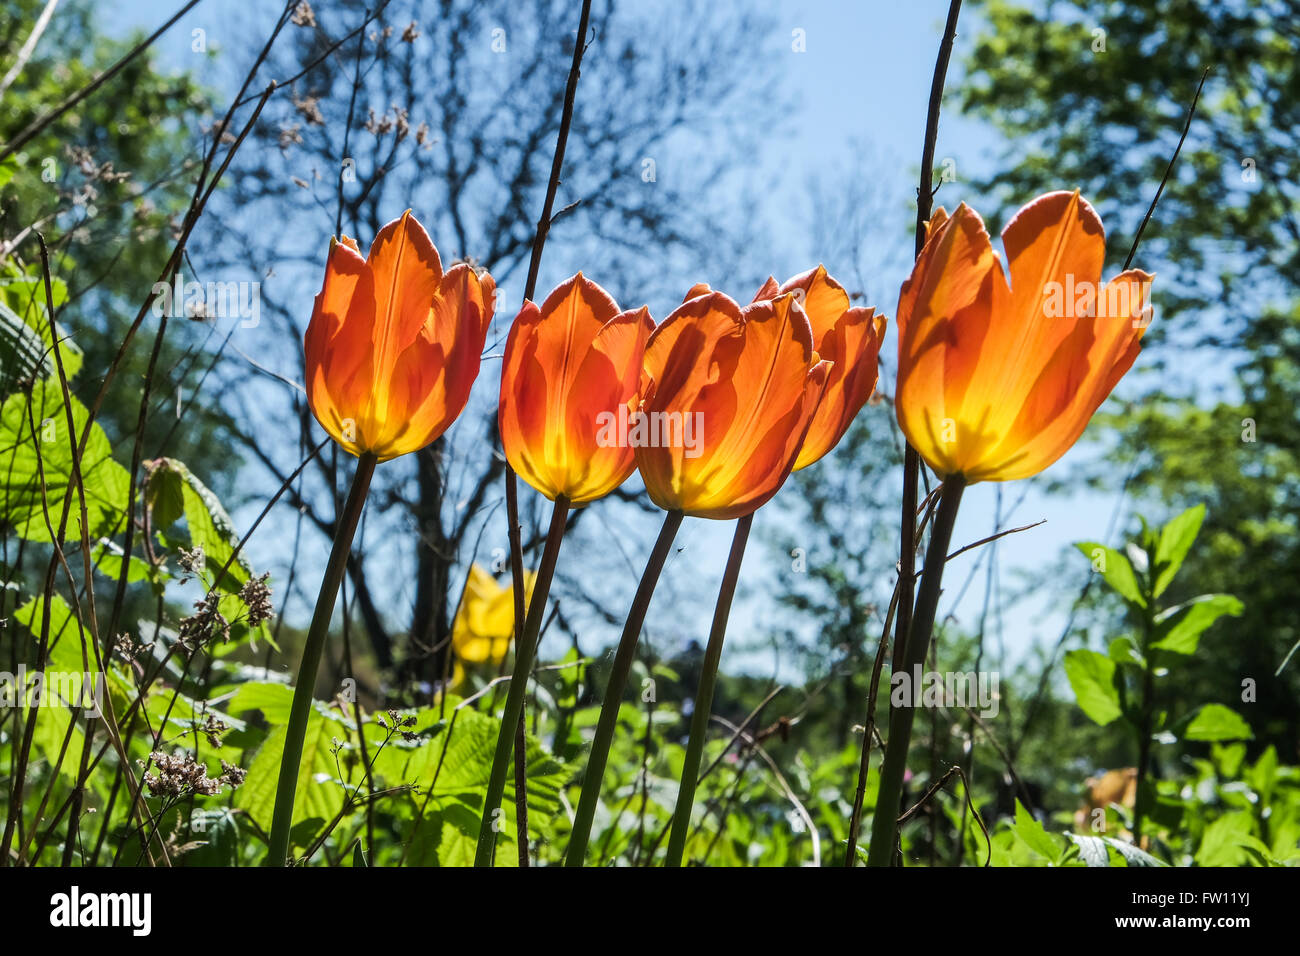 Wild growing tulip bed with five illuminated orange back lit tulips Stock Photo